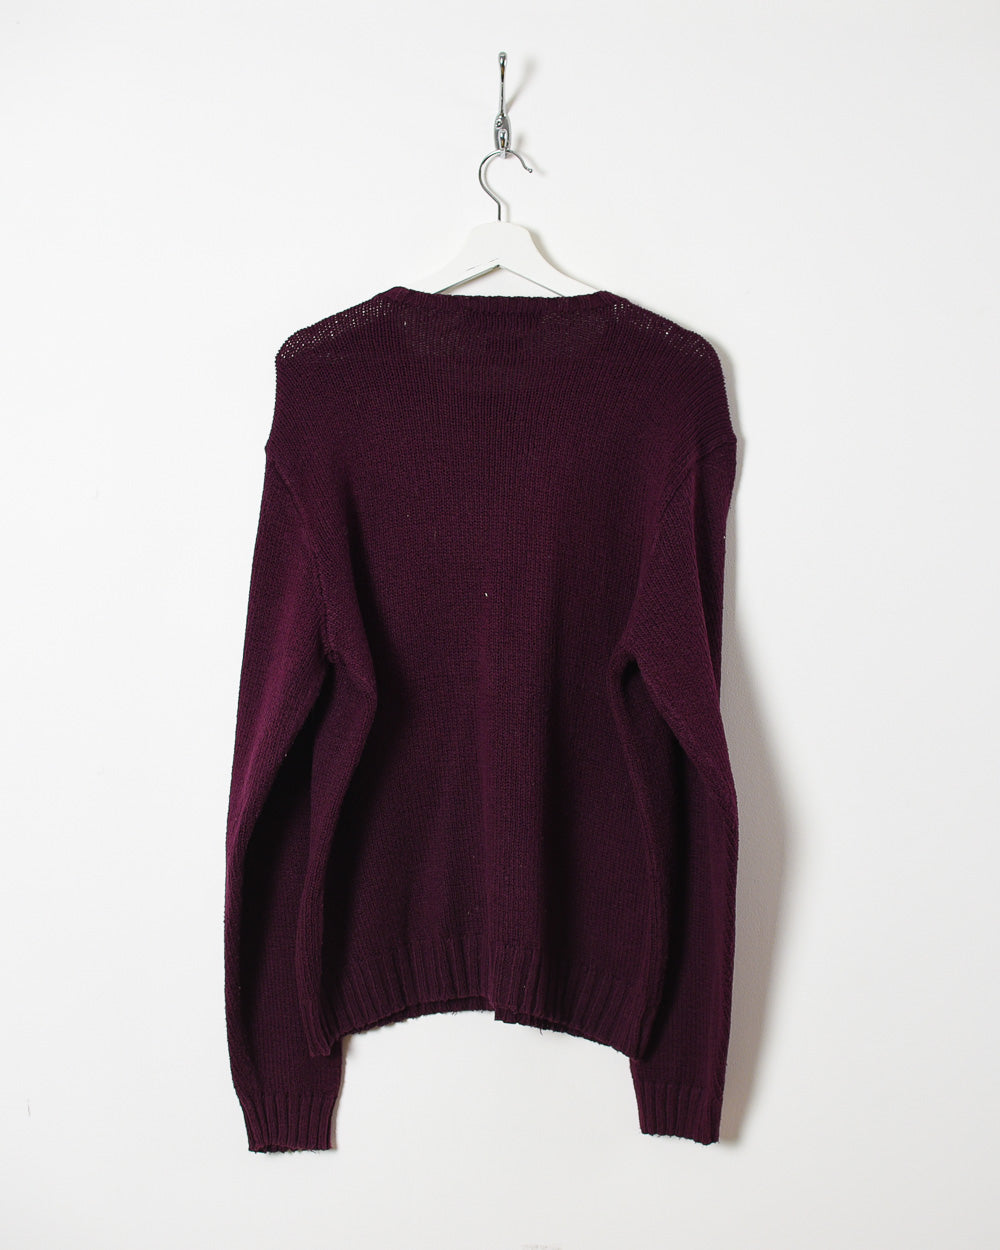 Maroon Ralph Lauren Knitted Sweatshirt - Medium